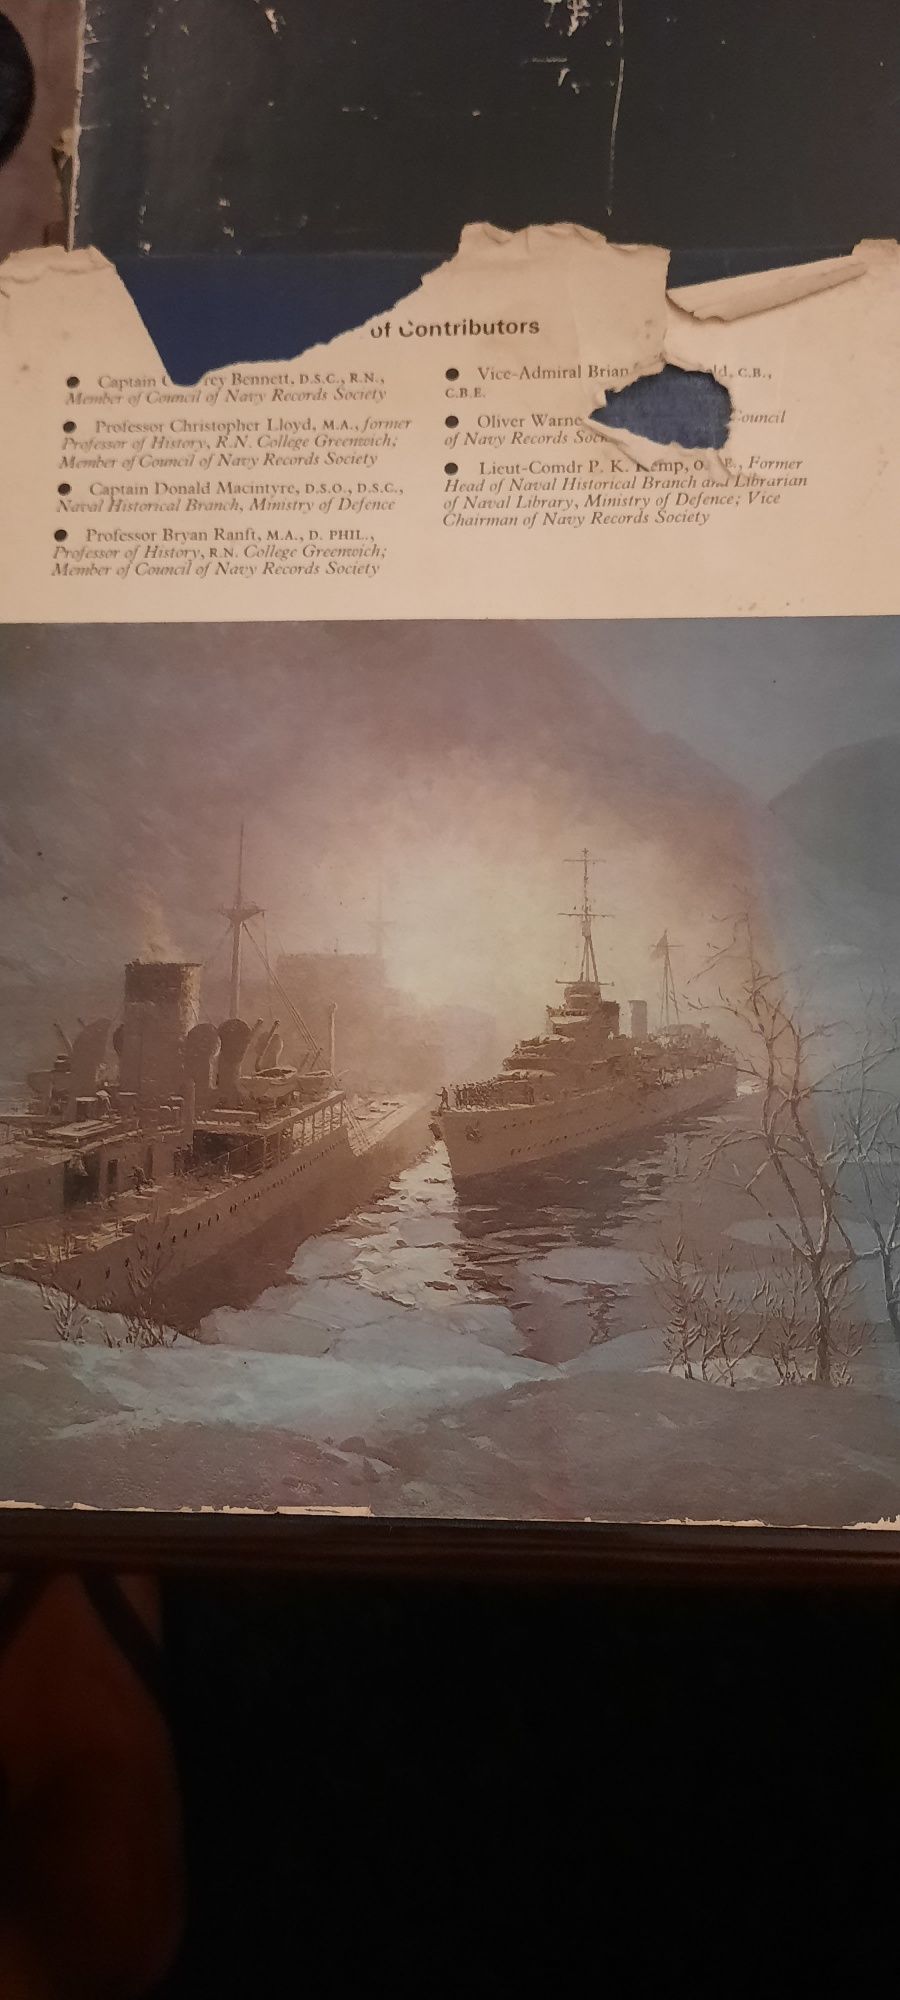 History of The Royal Navy